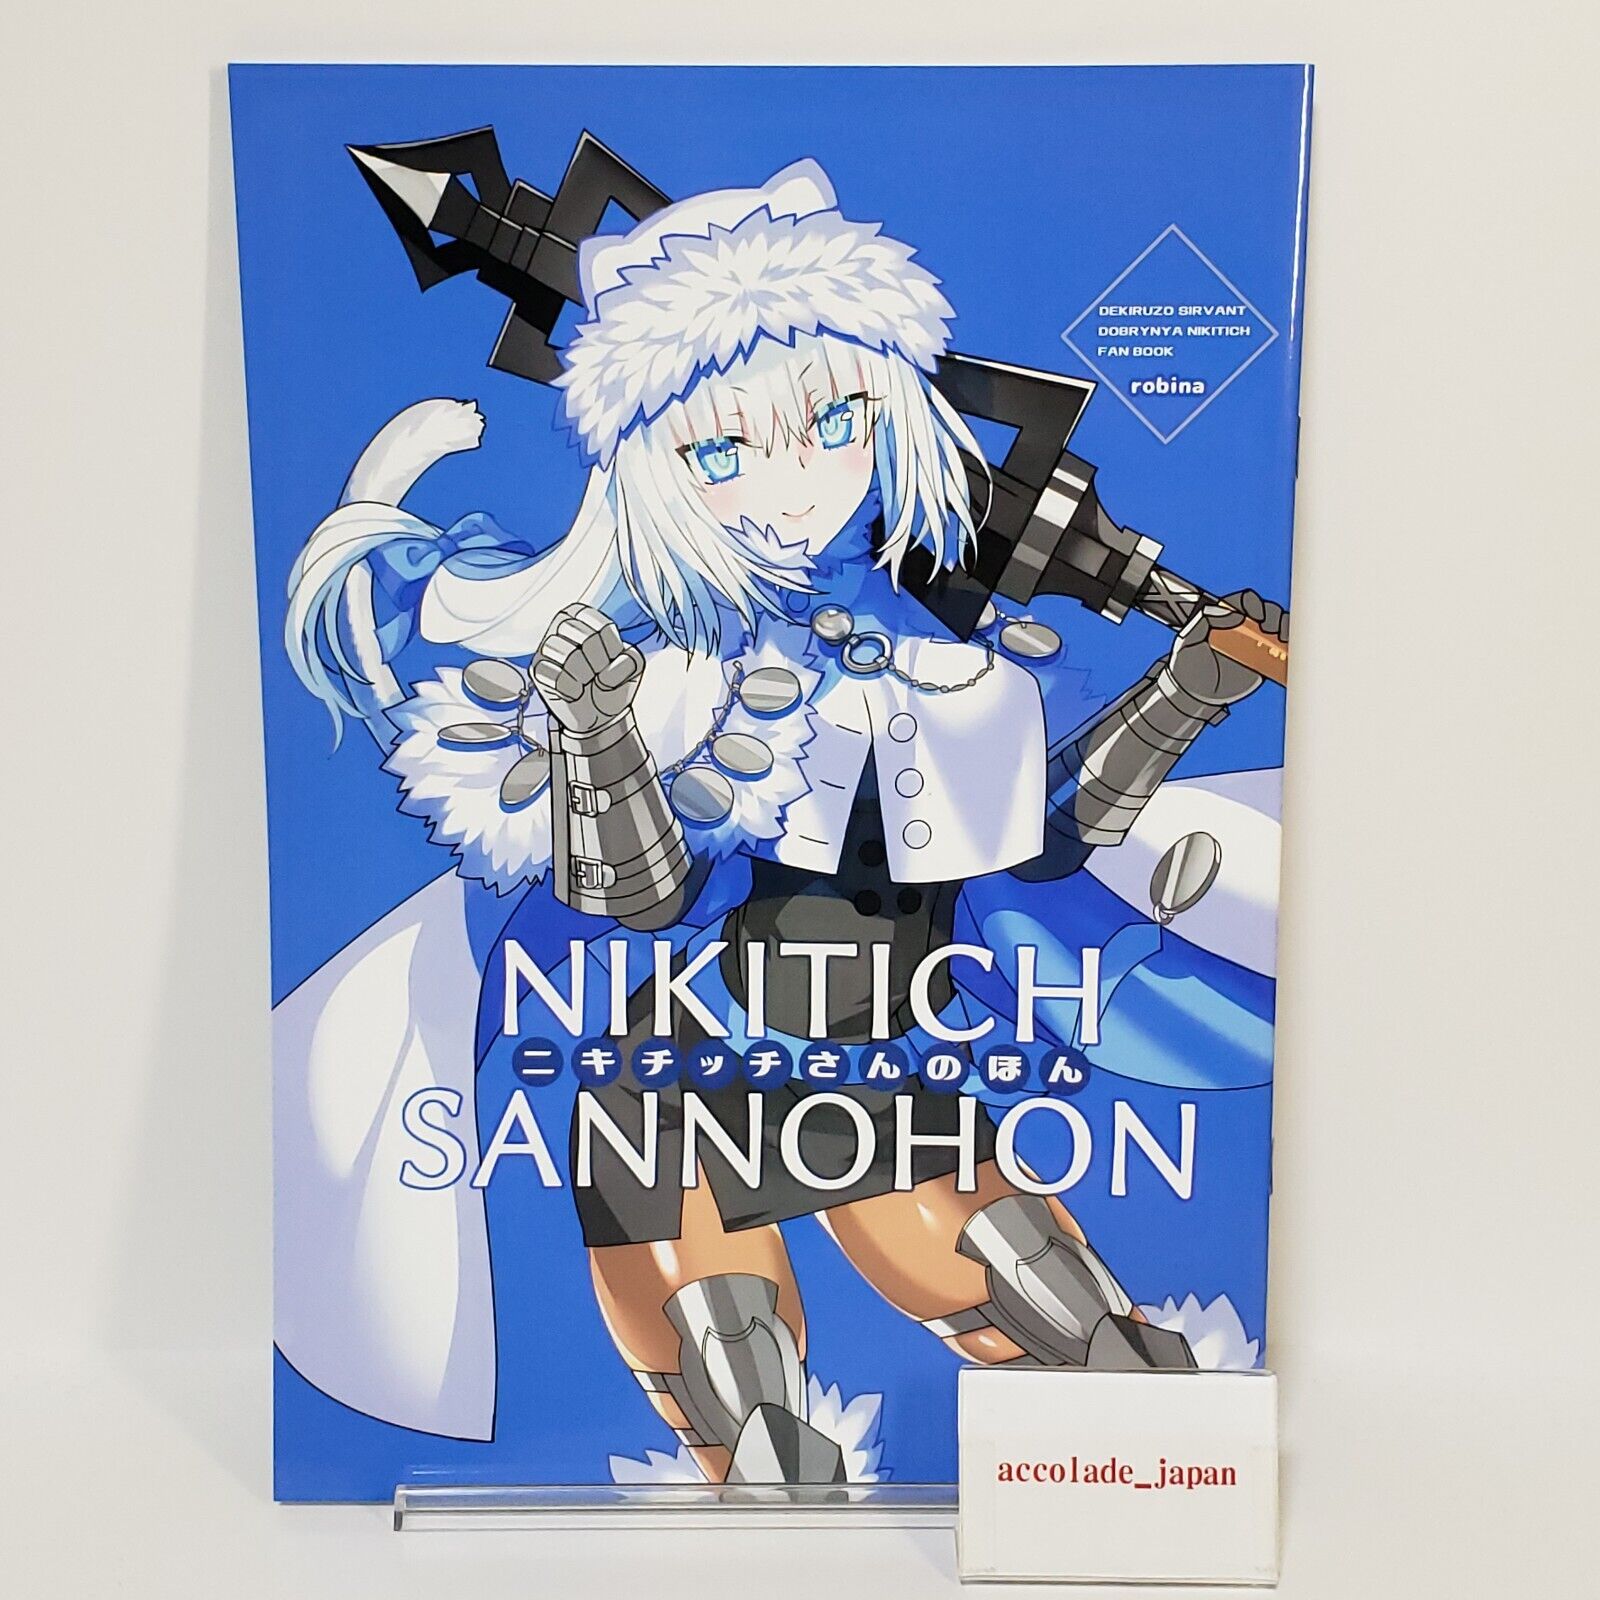 Nikitich Sannohon 1 Fate/Grand Order Art Book robina go round A4/32 Doujinshi